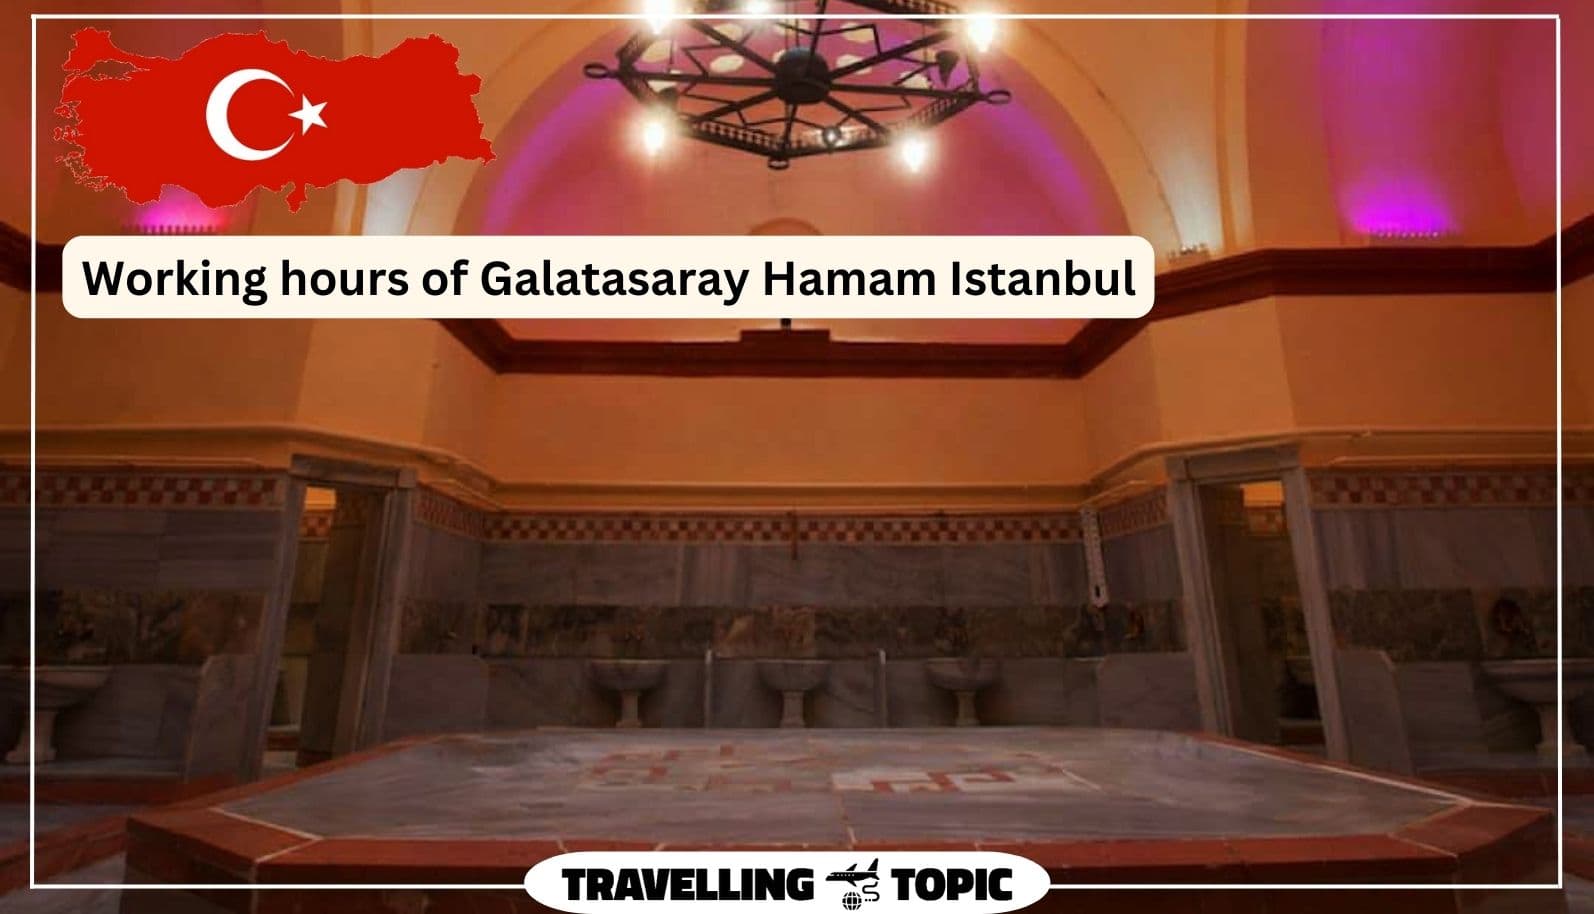 Working hours of Galatasaray Hamam Istanbul